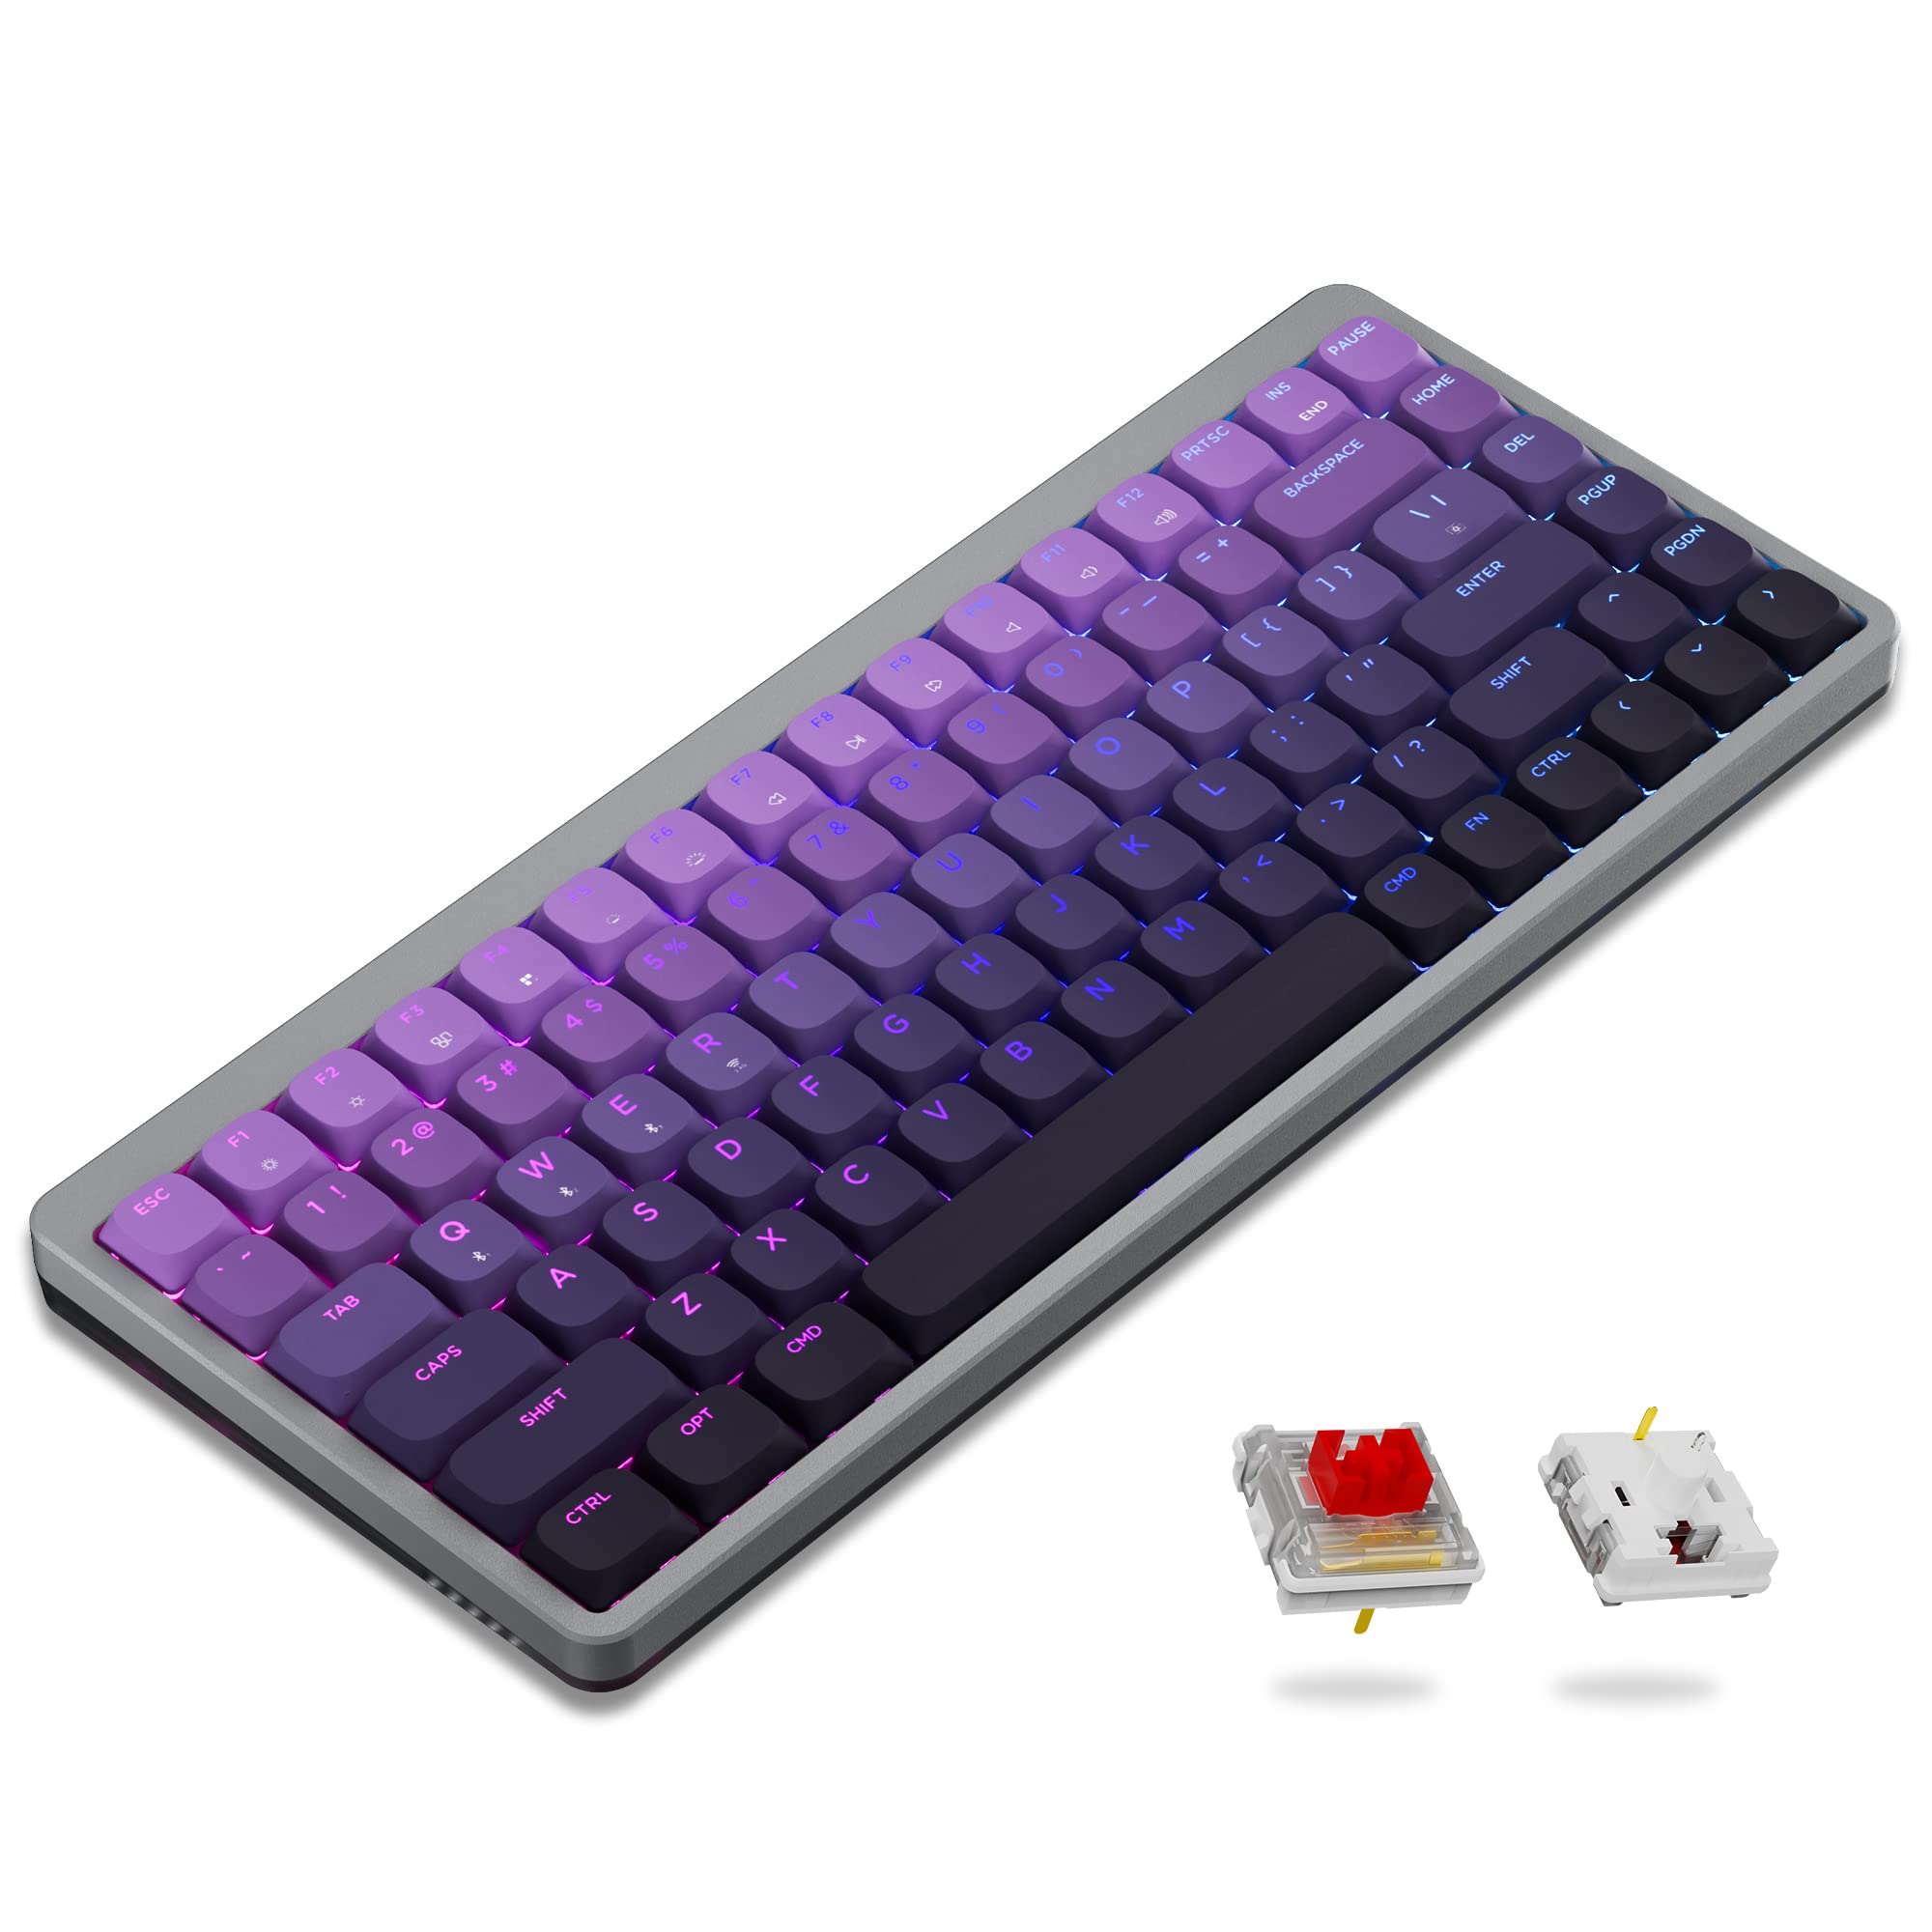 COSTOM L75 Low Profile Mechanical Keyboard 75 Wireless Keyboard Bluetooth2.4GhzWired Tri-Mode 84 Keys RGB Keyboard wDur